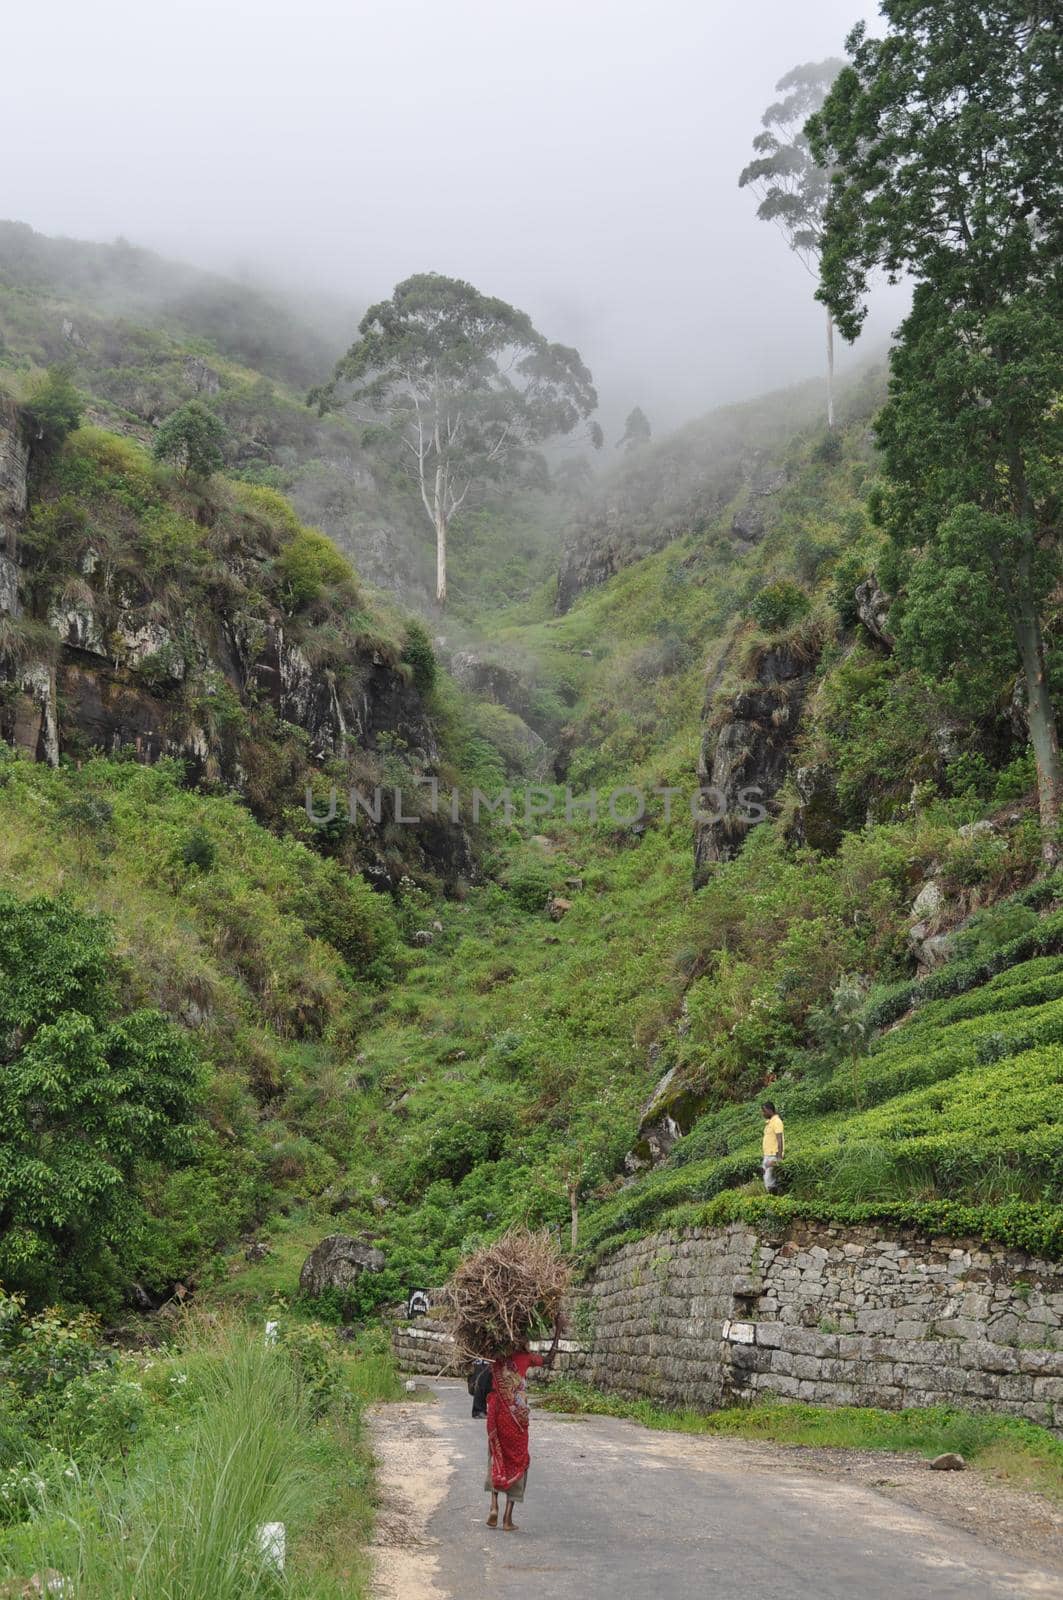 Tea plantations near the city of Haputale, Sri Lanka.